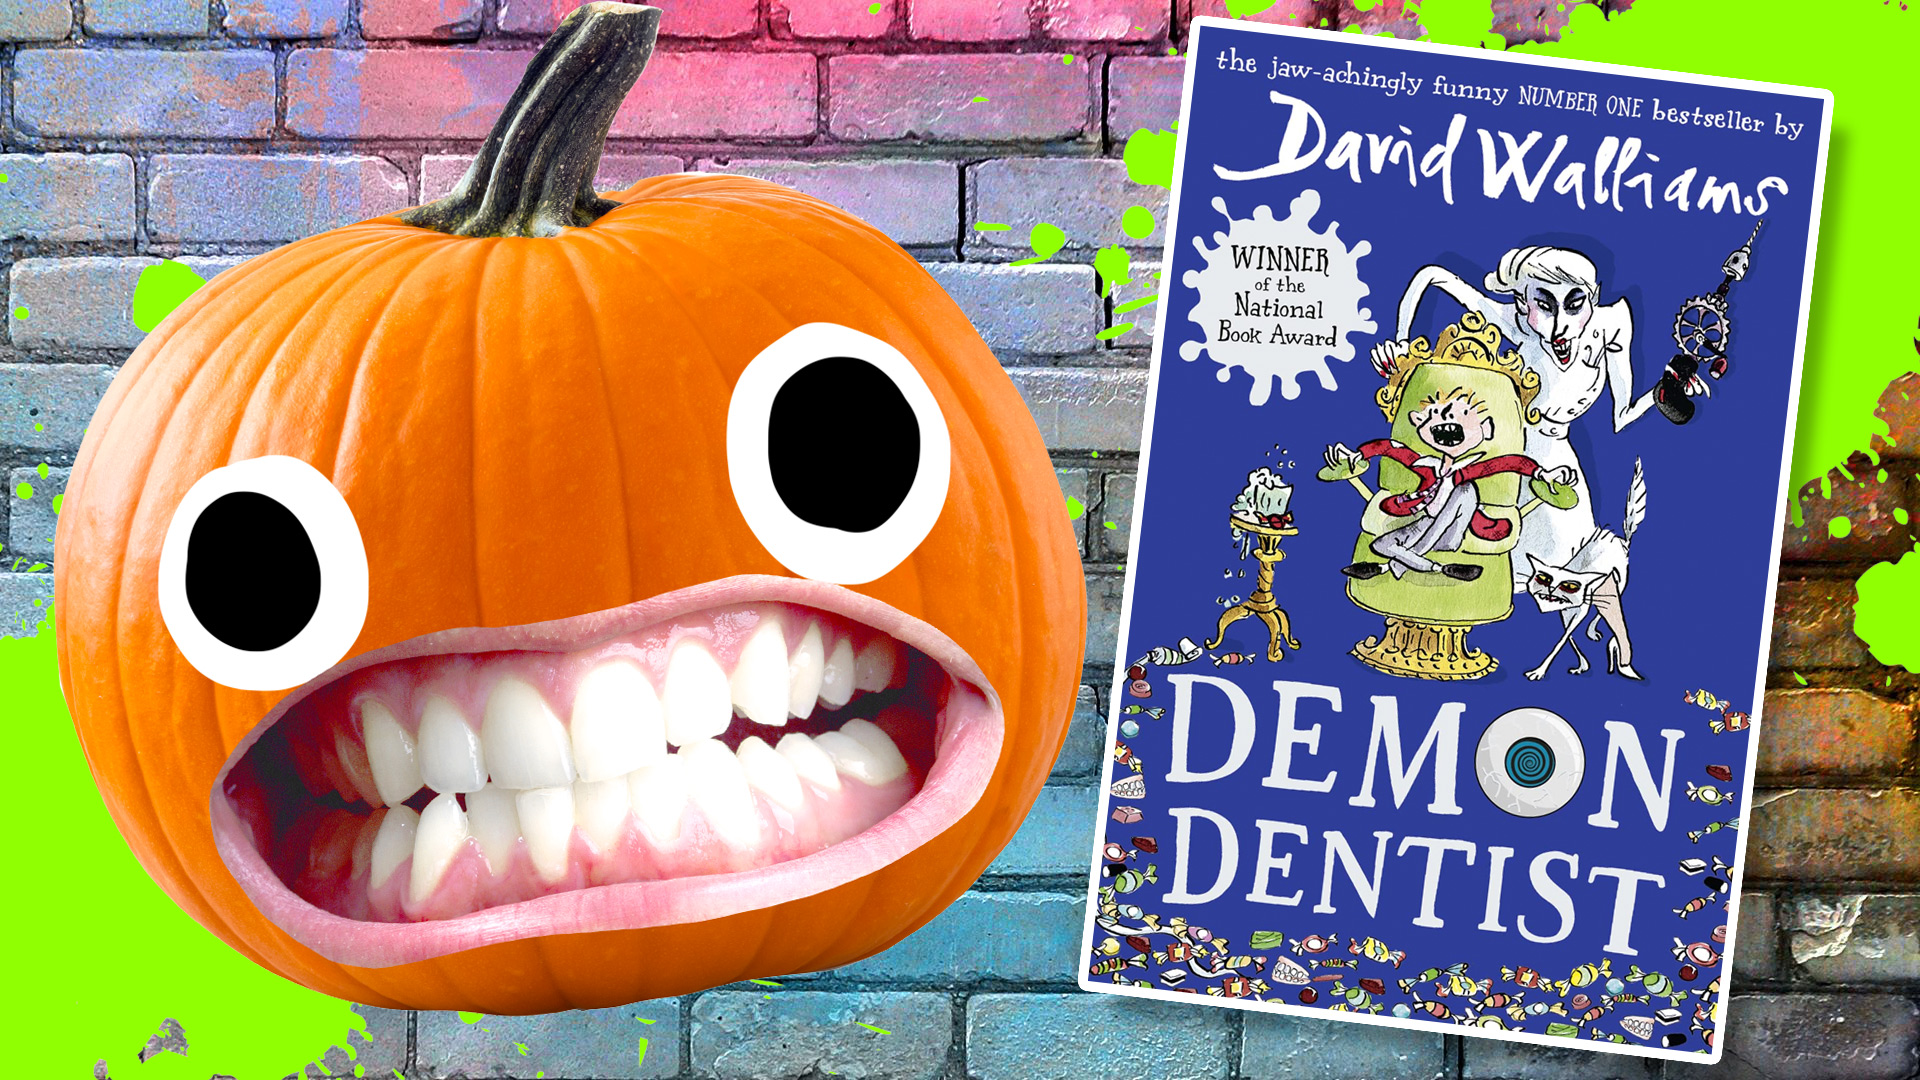 The Demon Dentist by David Walliams